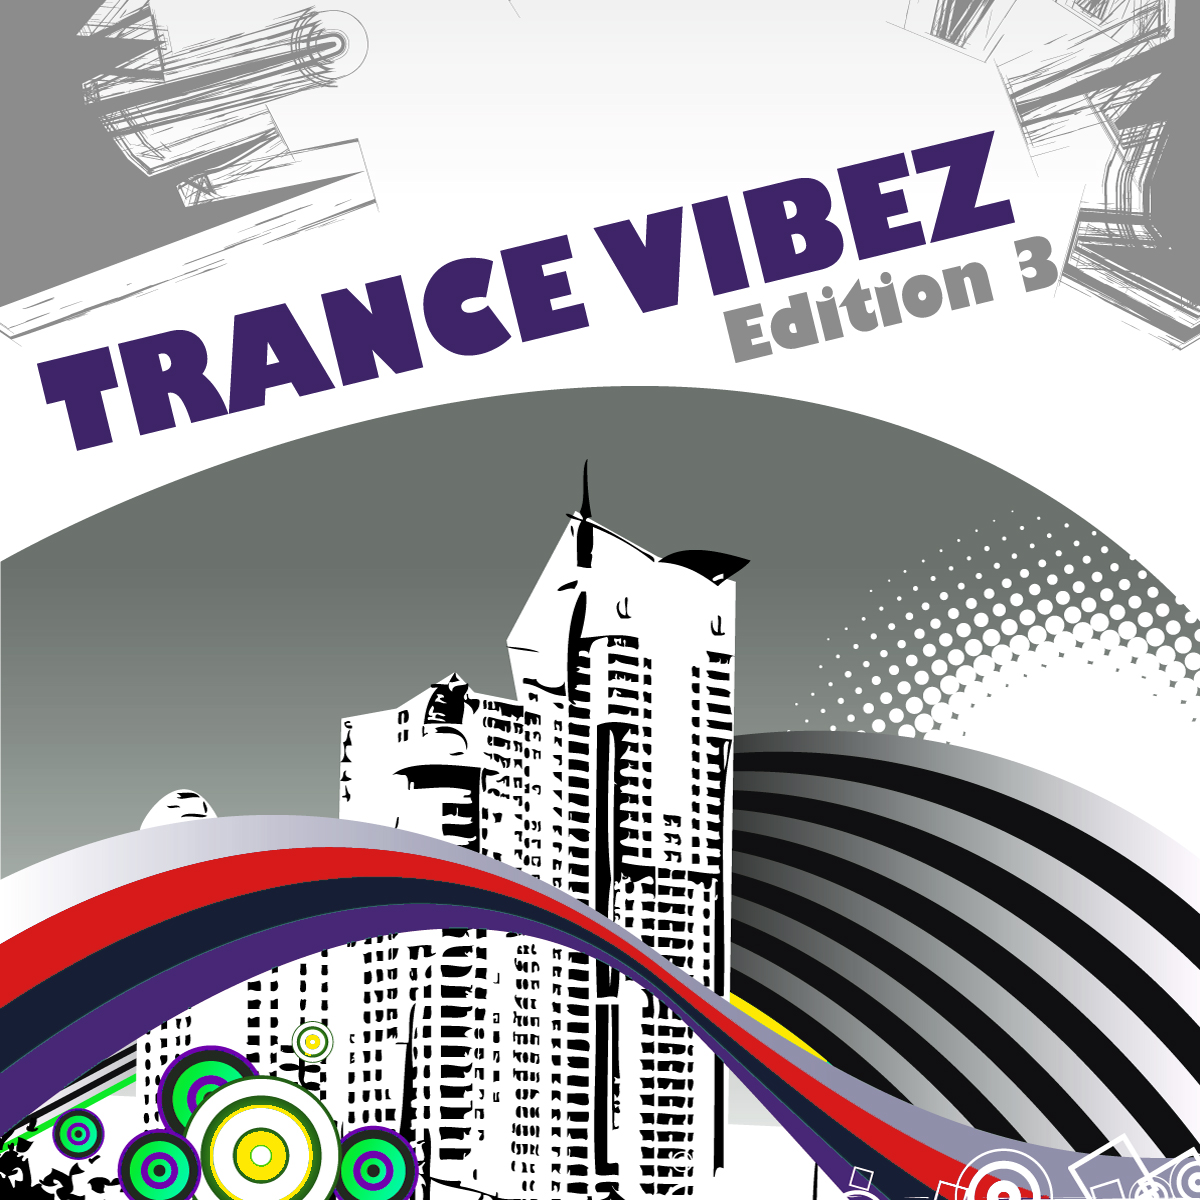 Trance Vibez - Edition 3